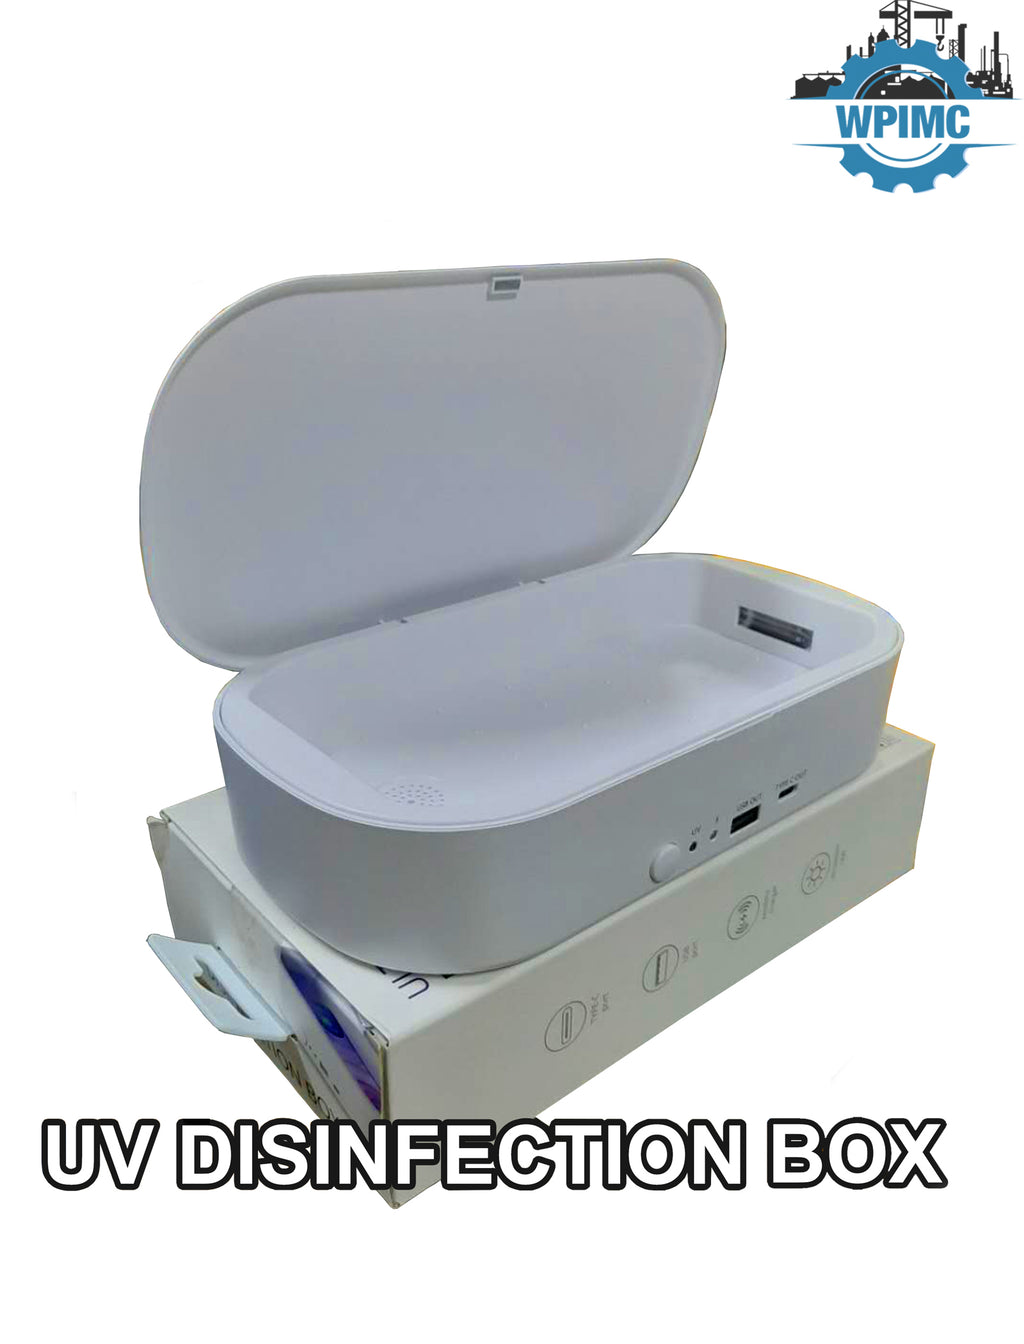 UV DISINFECTION BOX